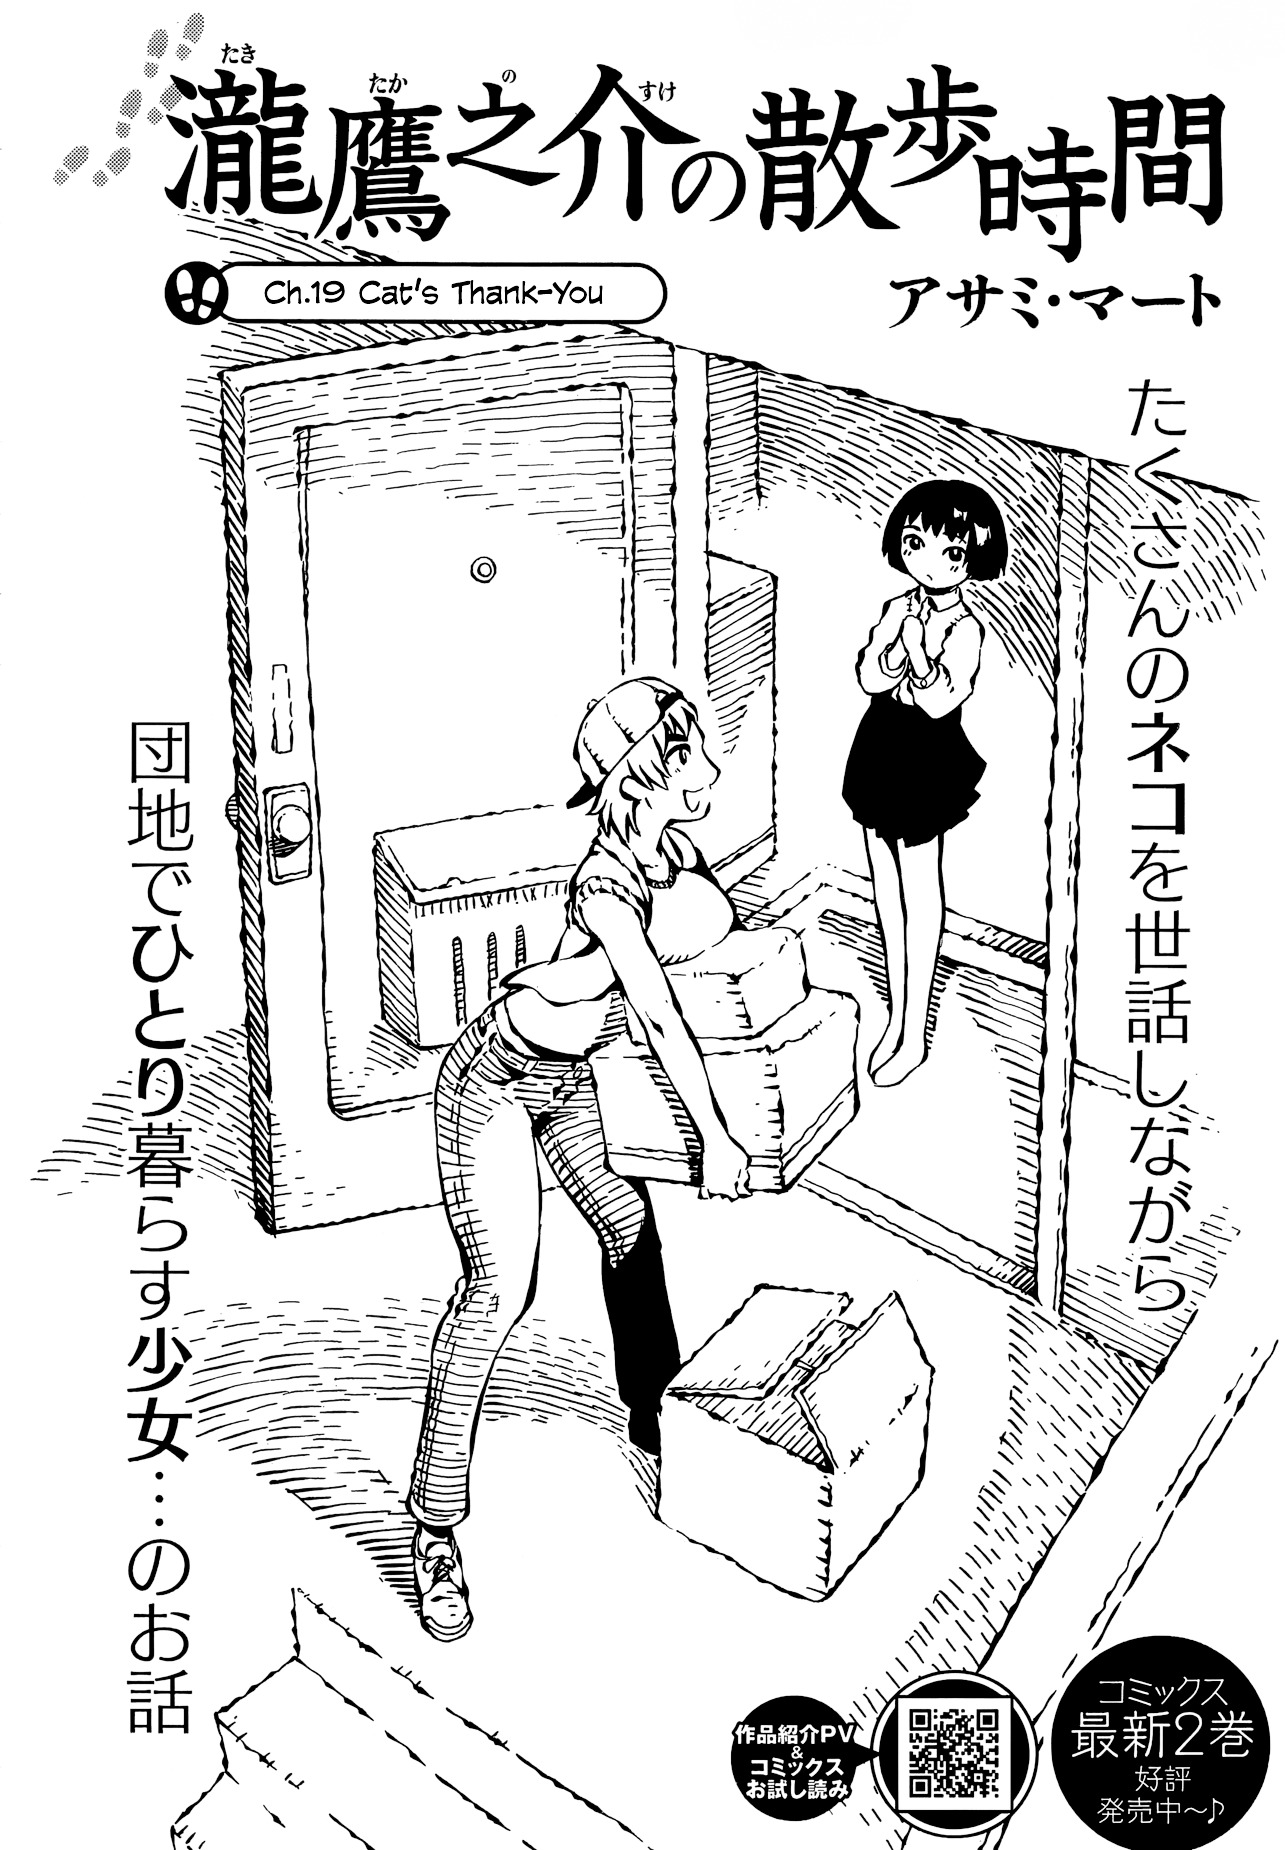 Takitakanosuke No Sanpo Jikan - Page 2